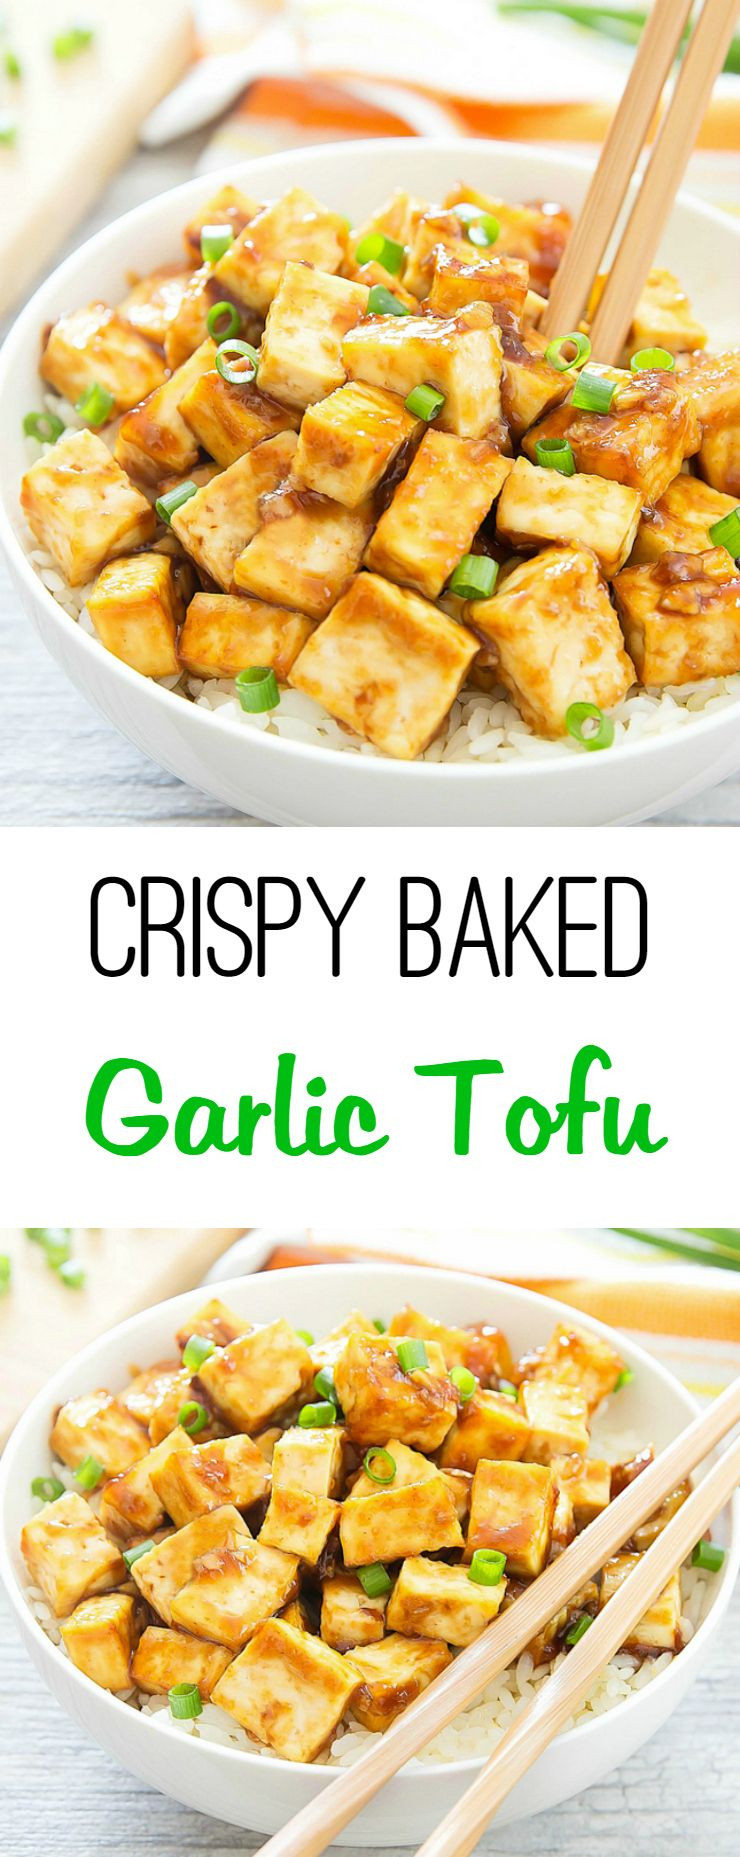 Tofu Recipes Baked
 Crispy Baked Garlic Tofu Recipe